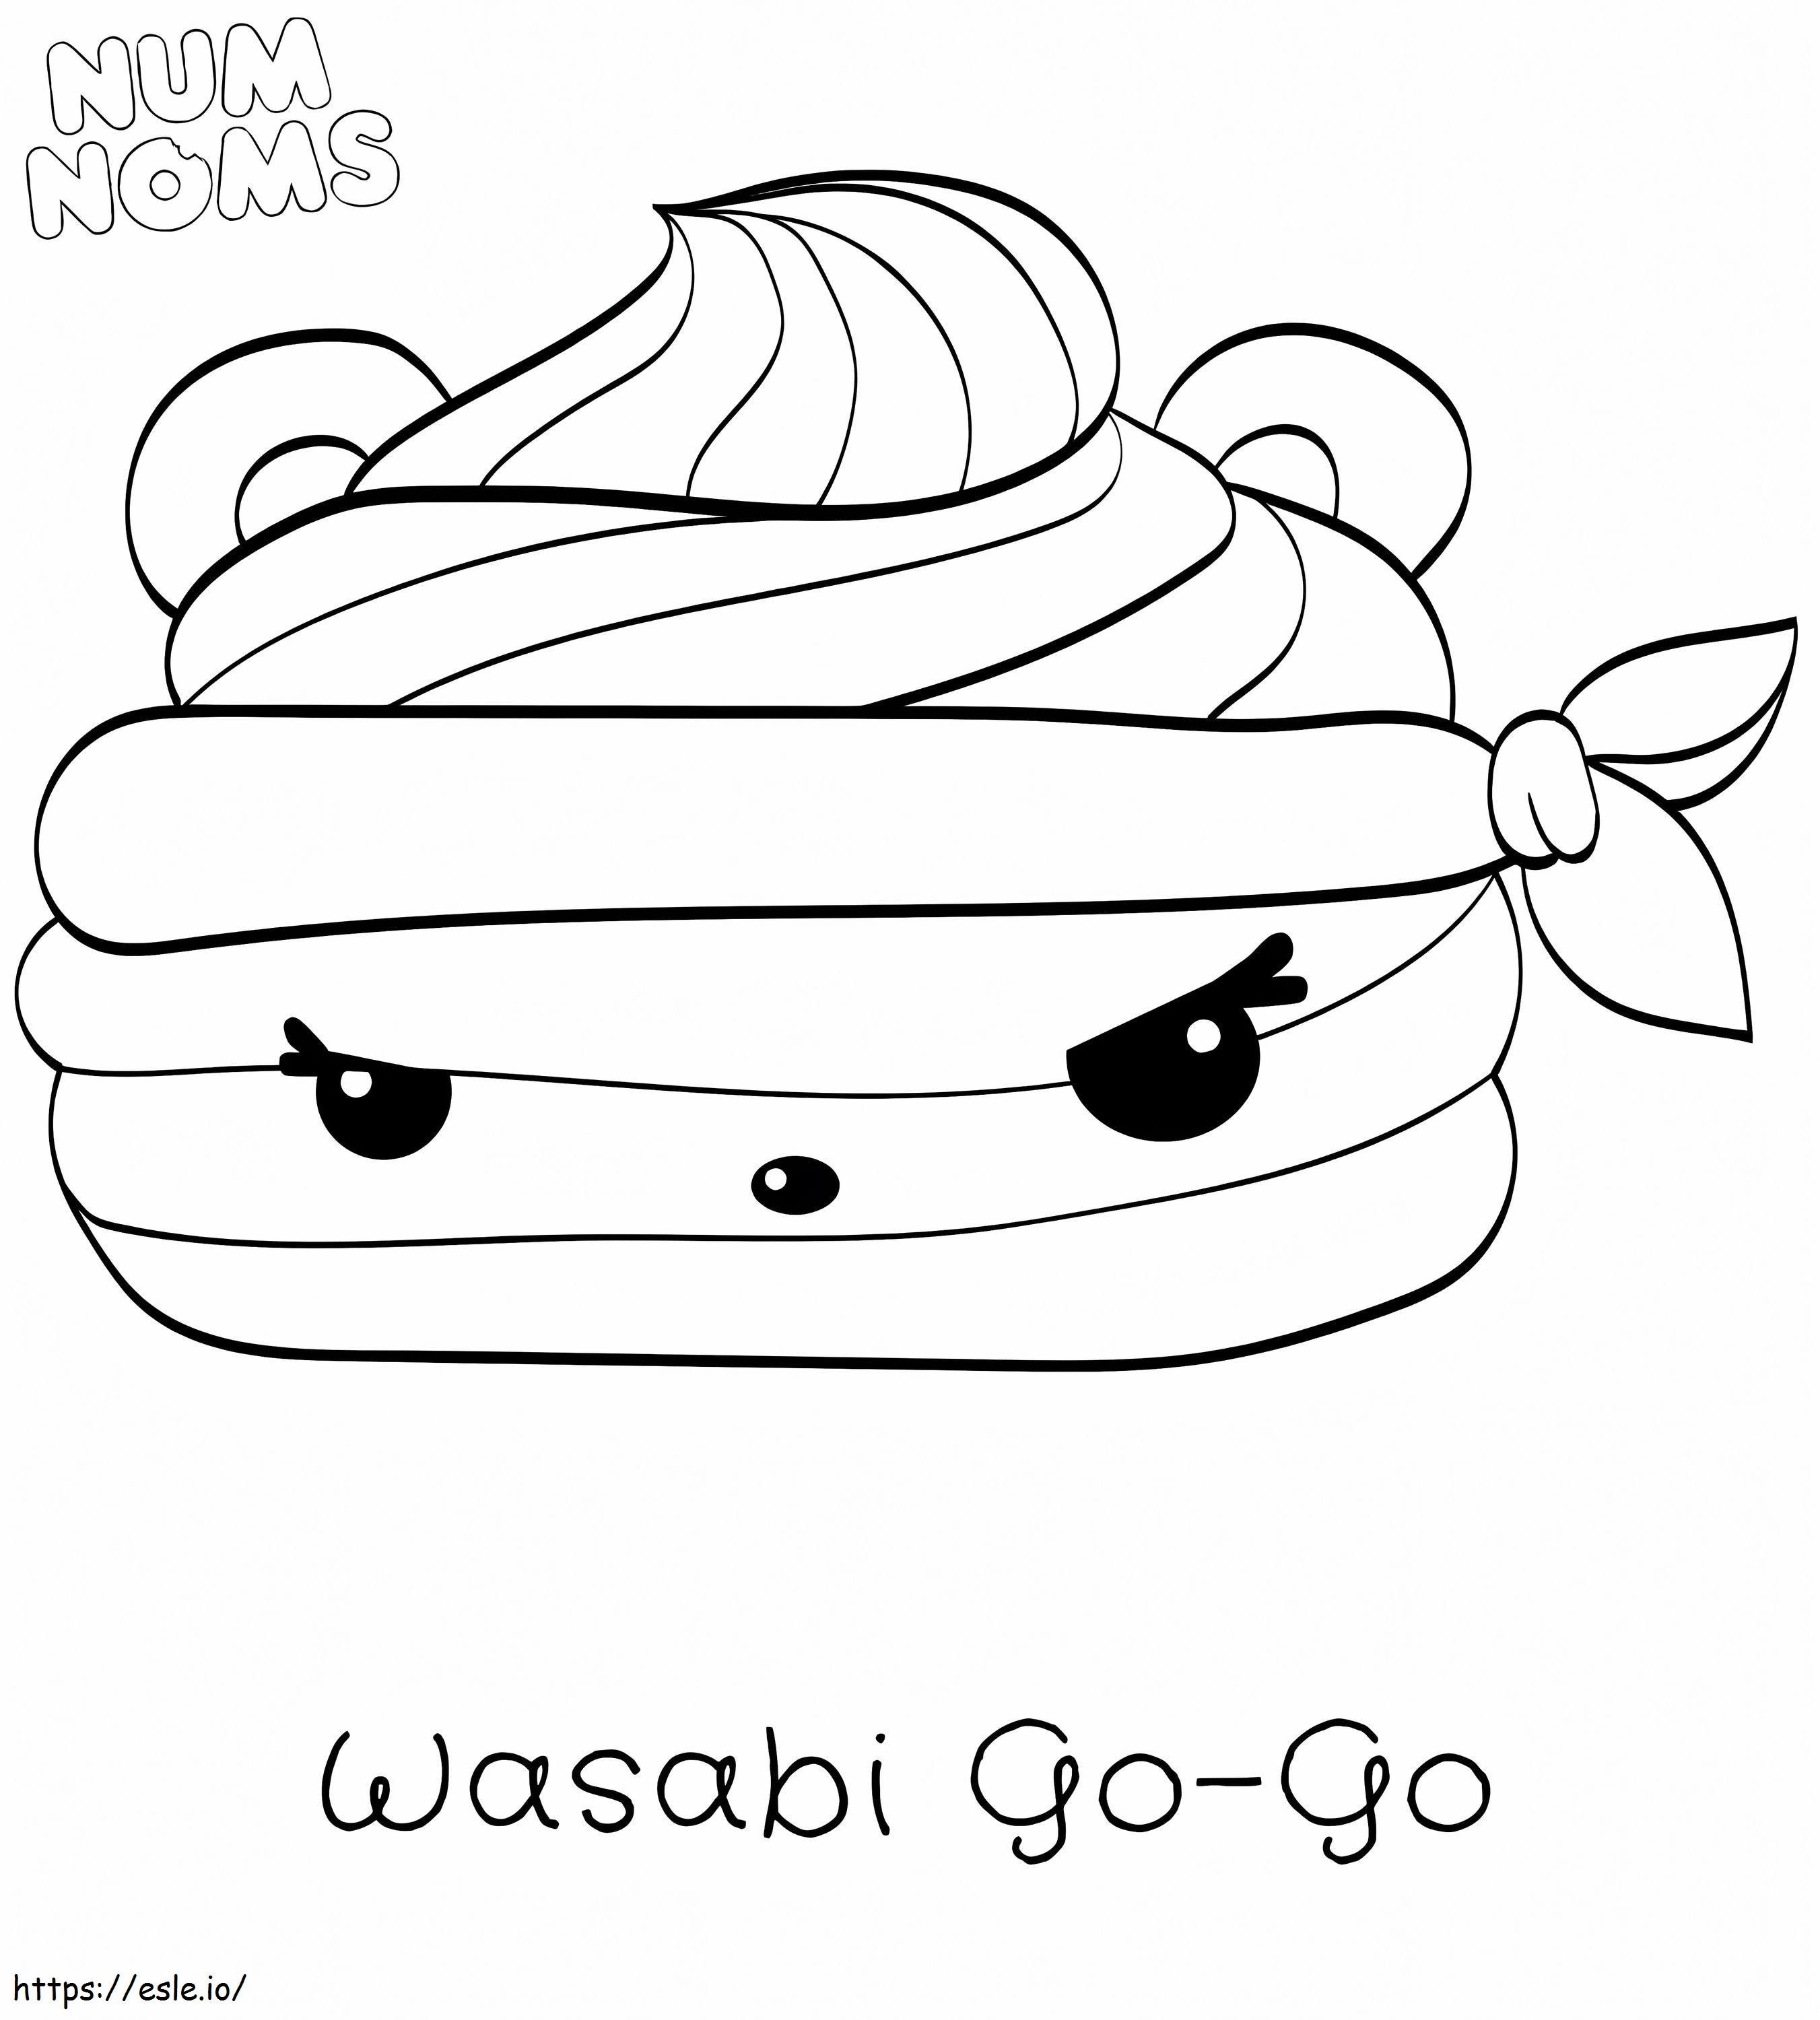 Fresco Wasabi Go Go ja Num Noms värityskuva